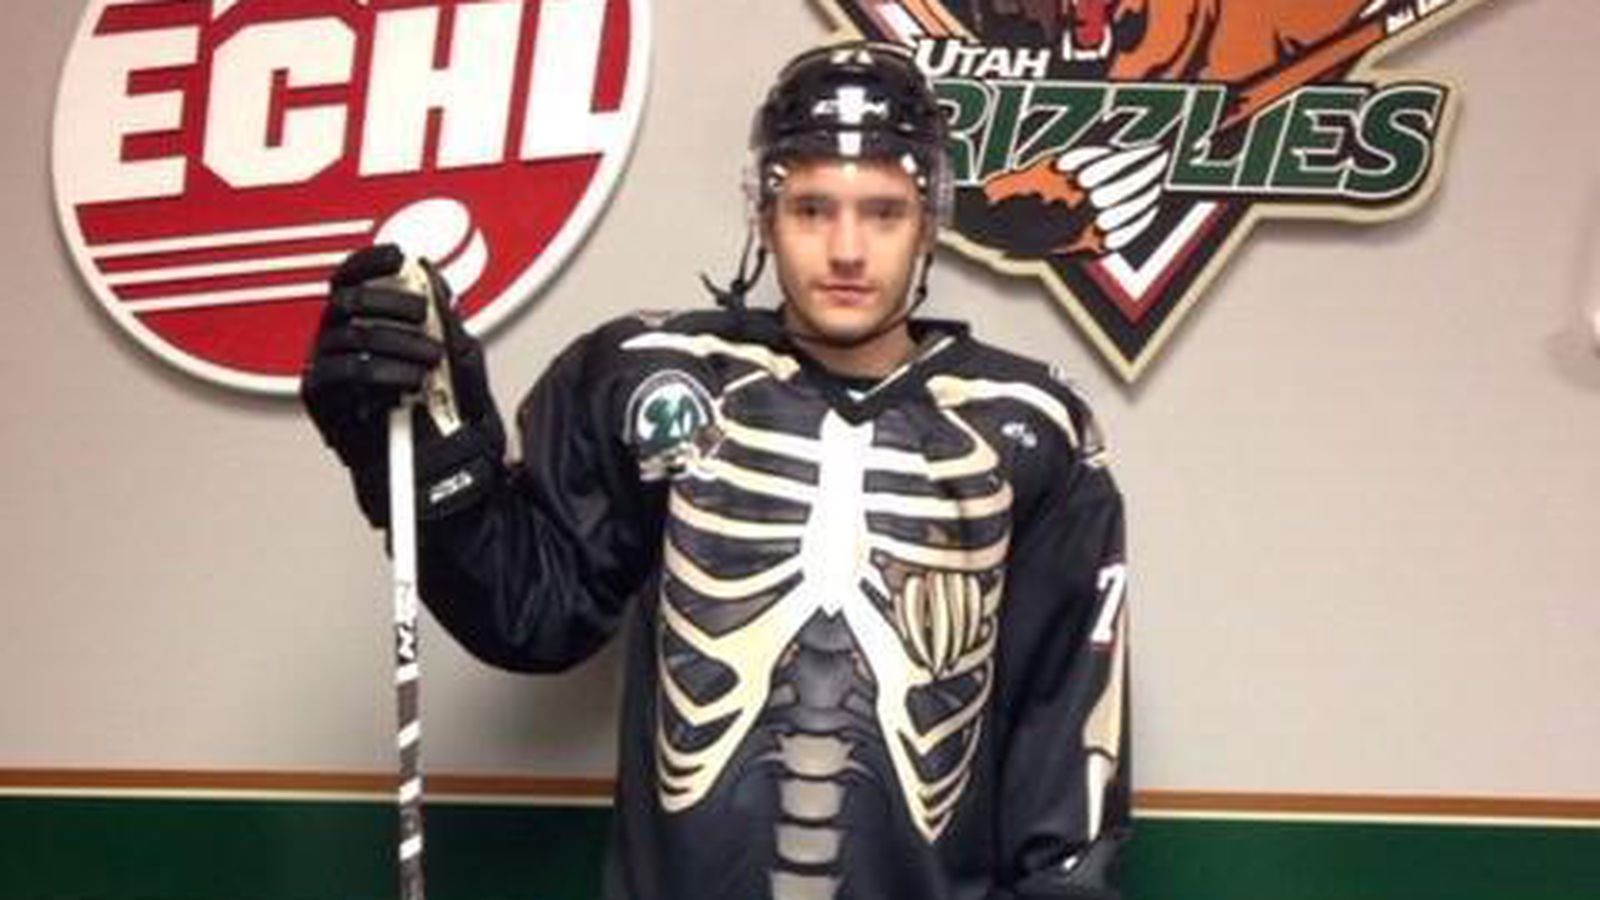 Hockey team is wearing skeleton jerseys for Halloween - SBNation.com